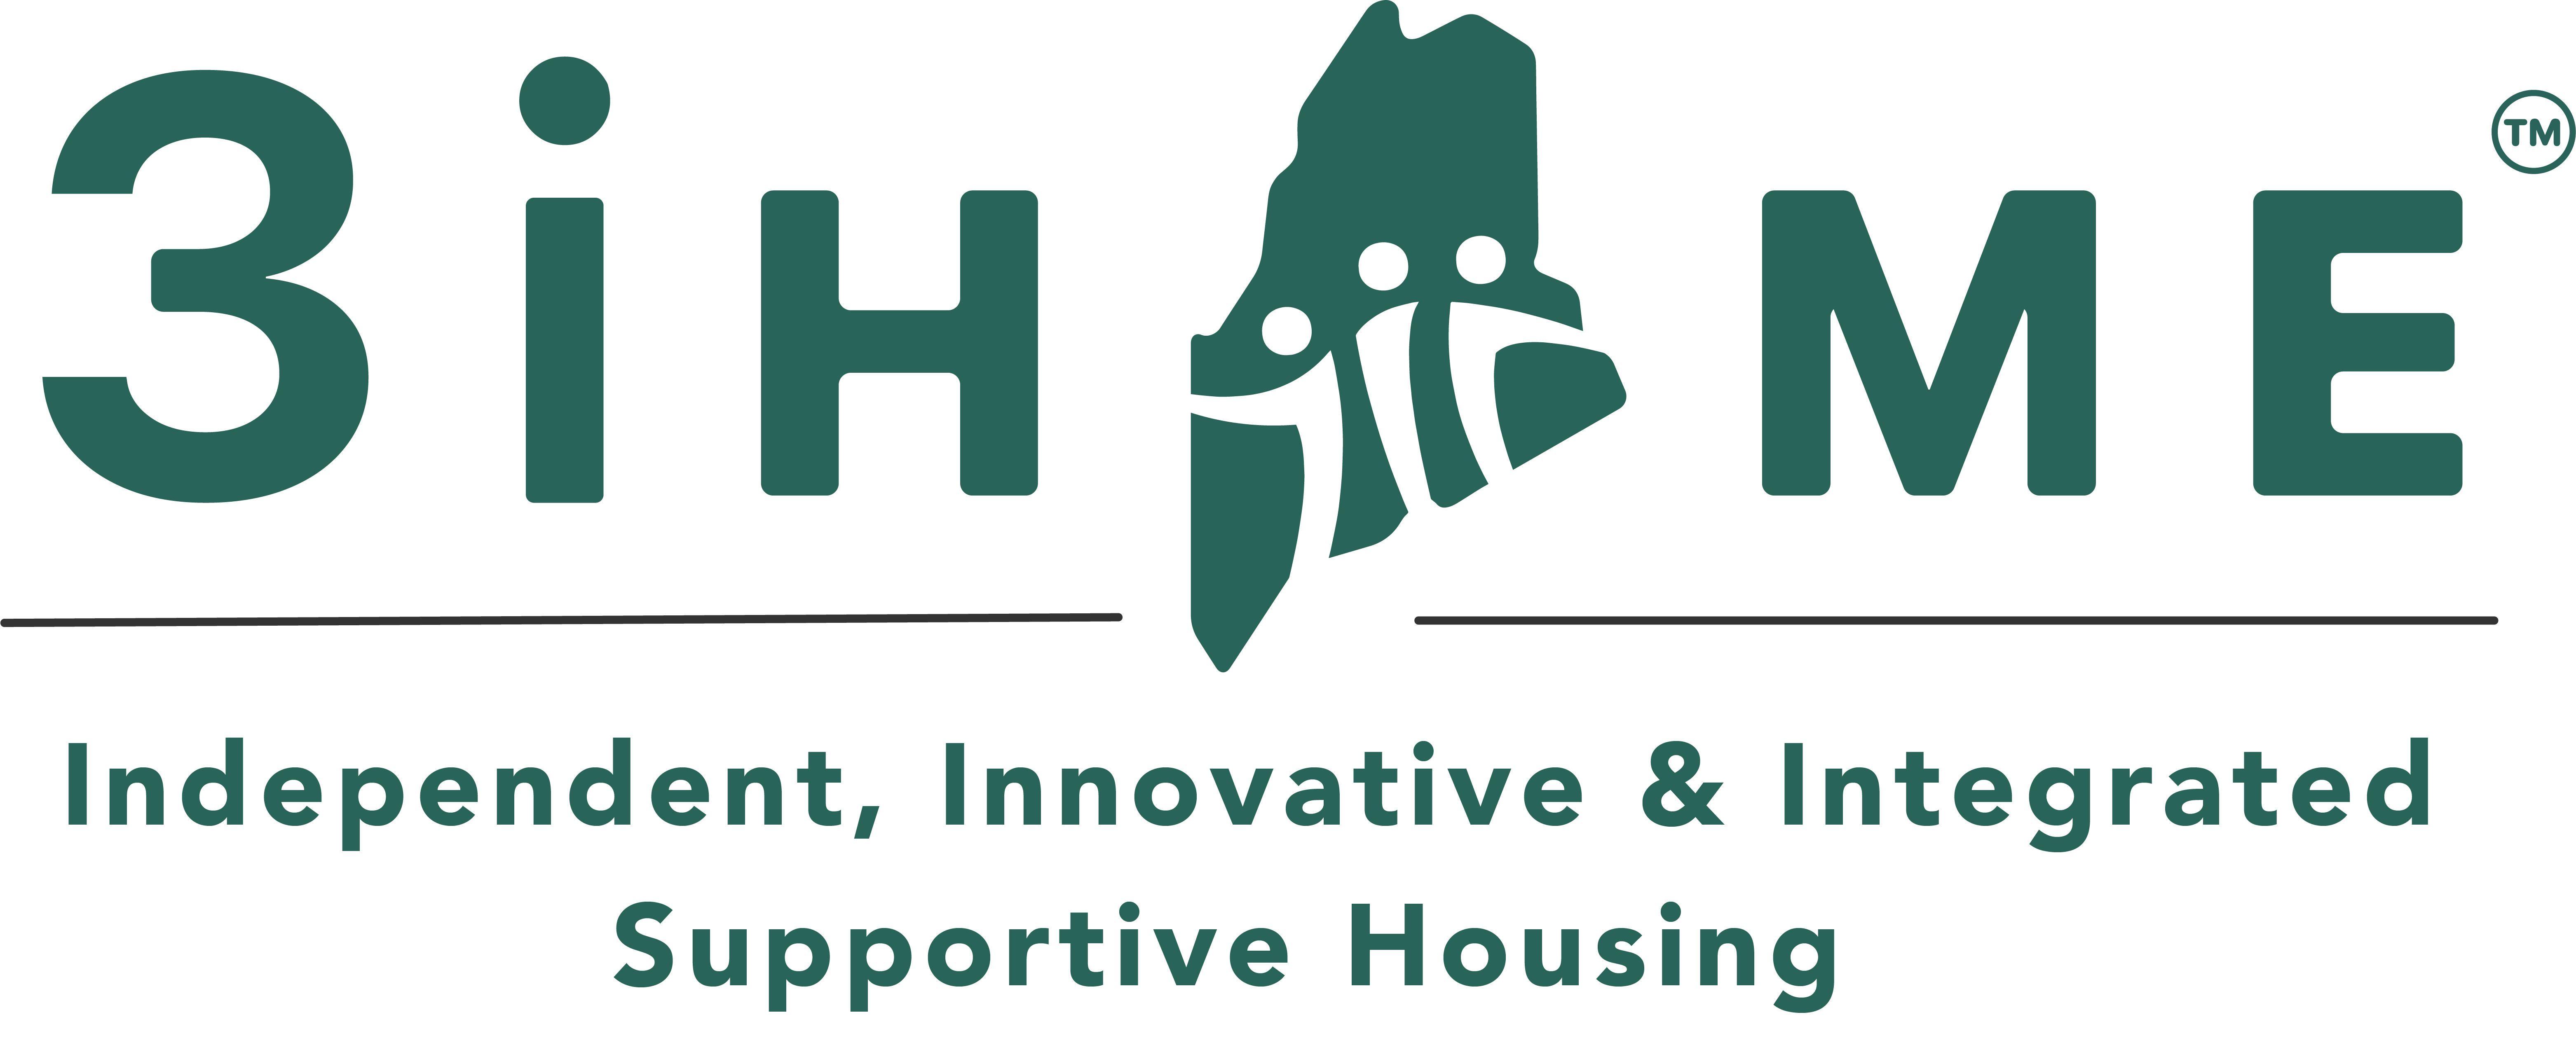 3i Housing of Maine logo